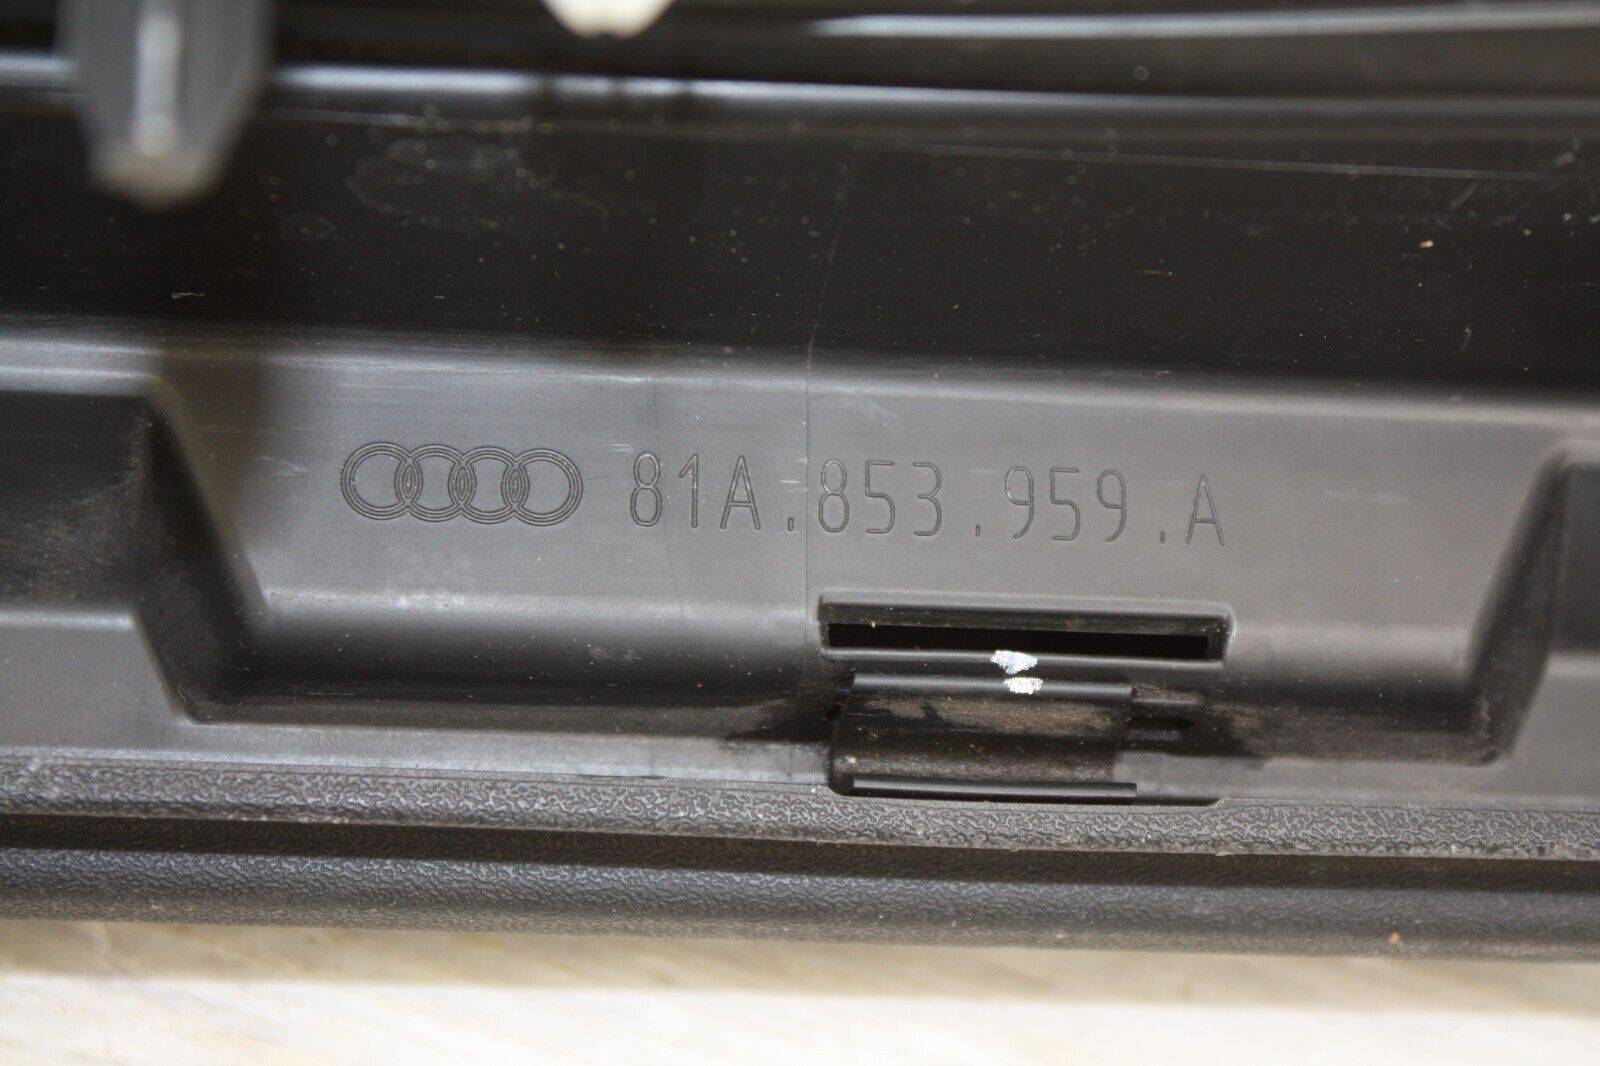 Audi-Q2-S-Line-Front-Left-Door-Moulding-2016-to-2021-81A853959A-Genuine-175955536525-9